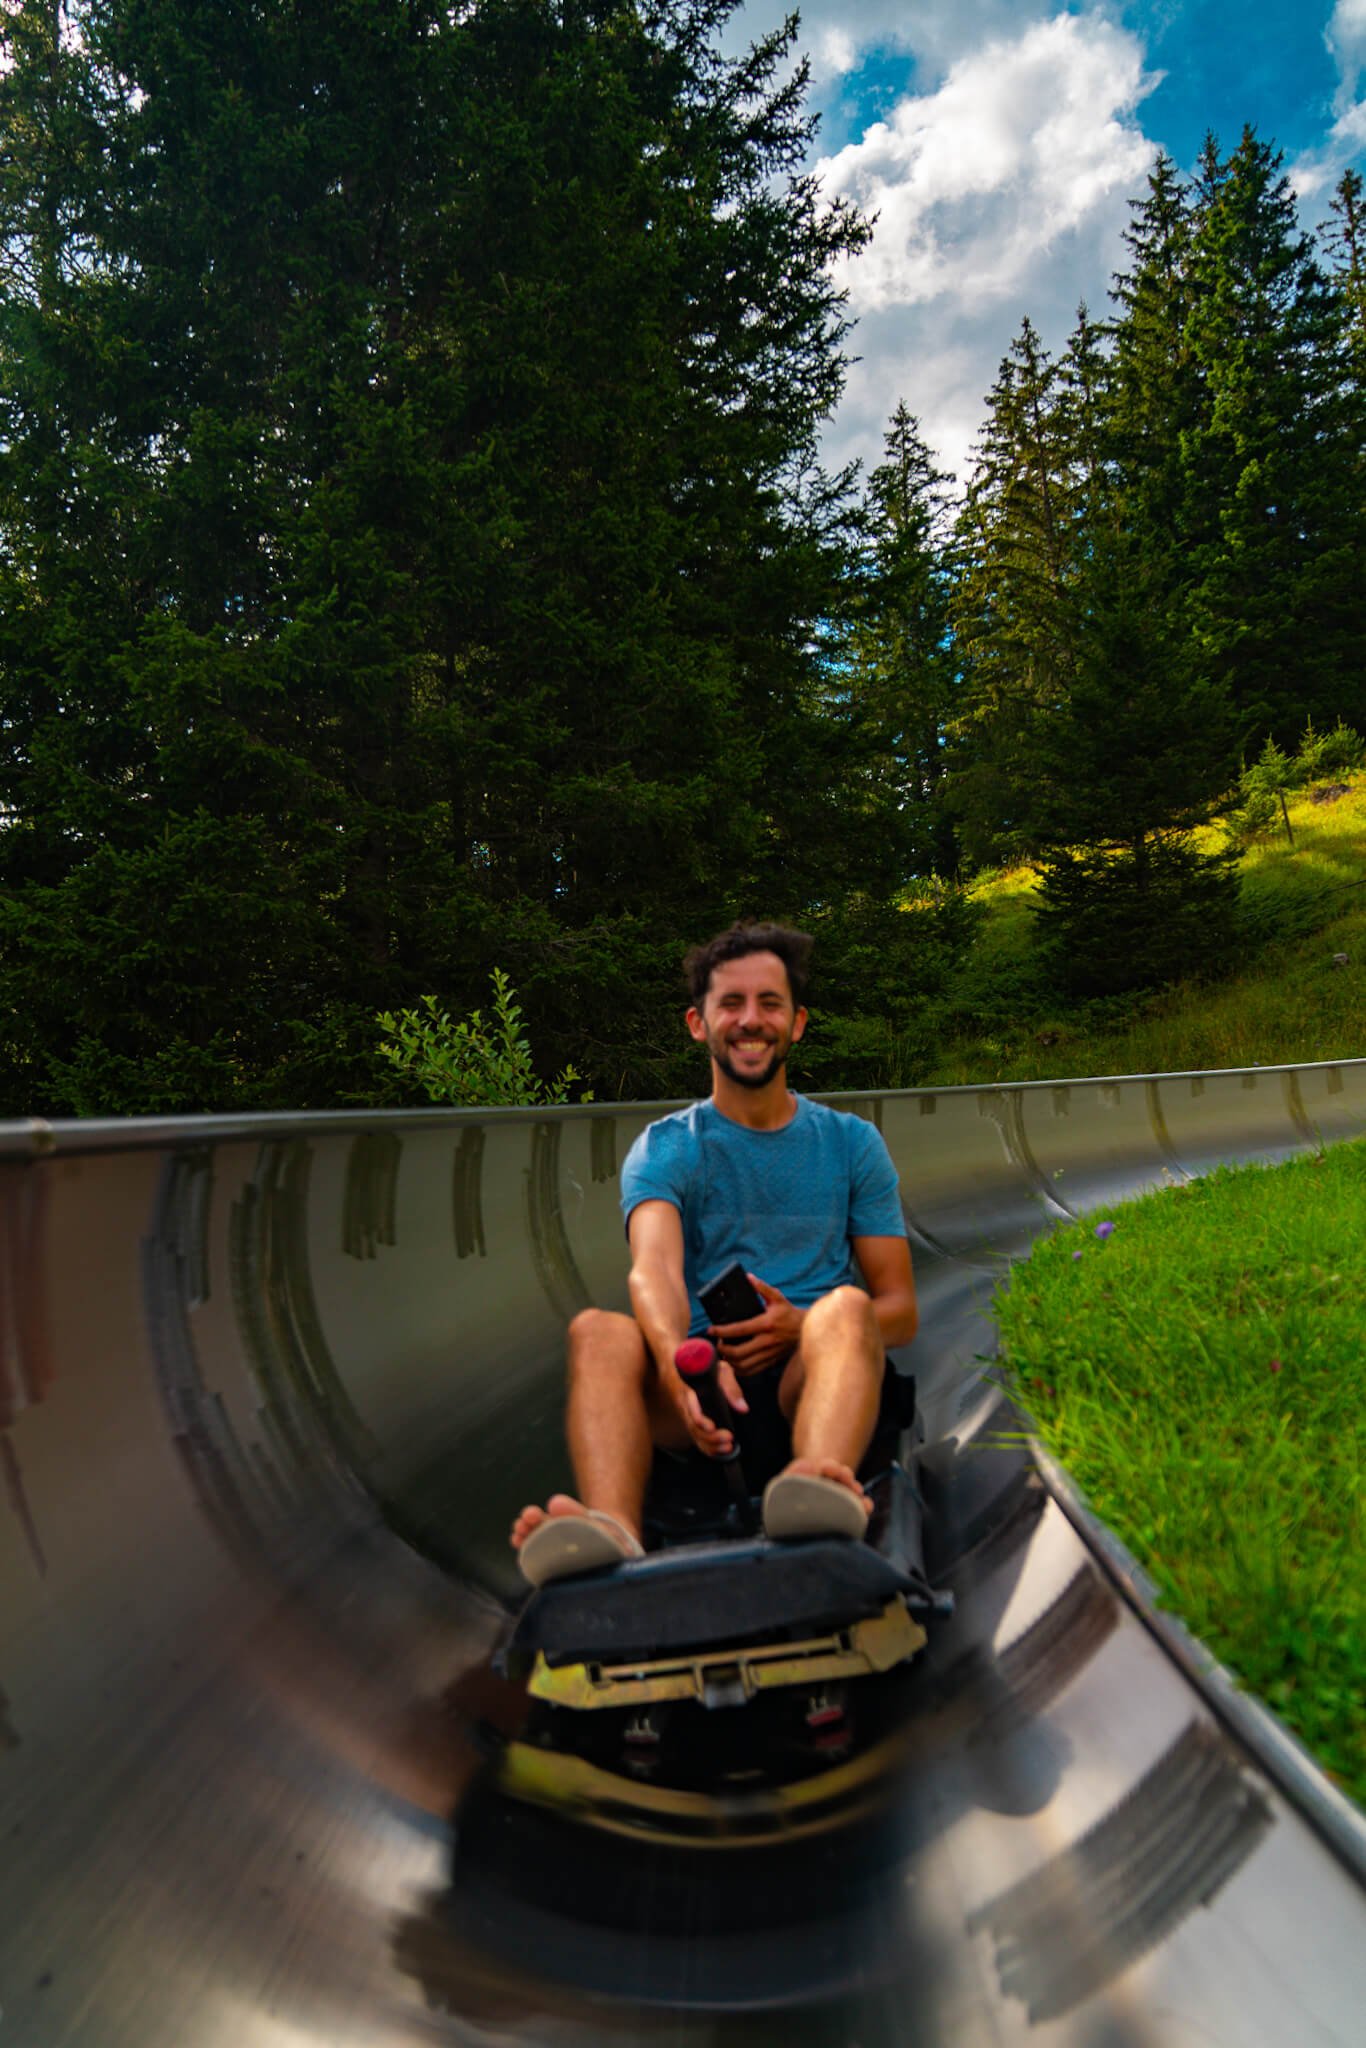 mountain coaster at Oeschinensee in Switzerland